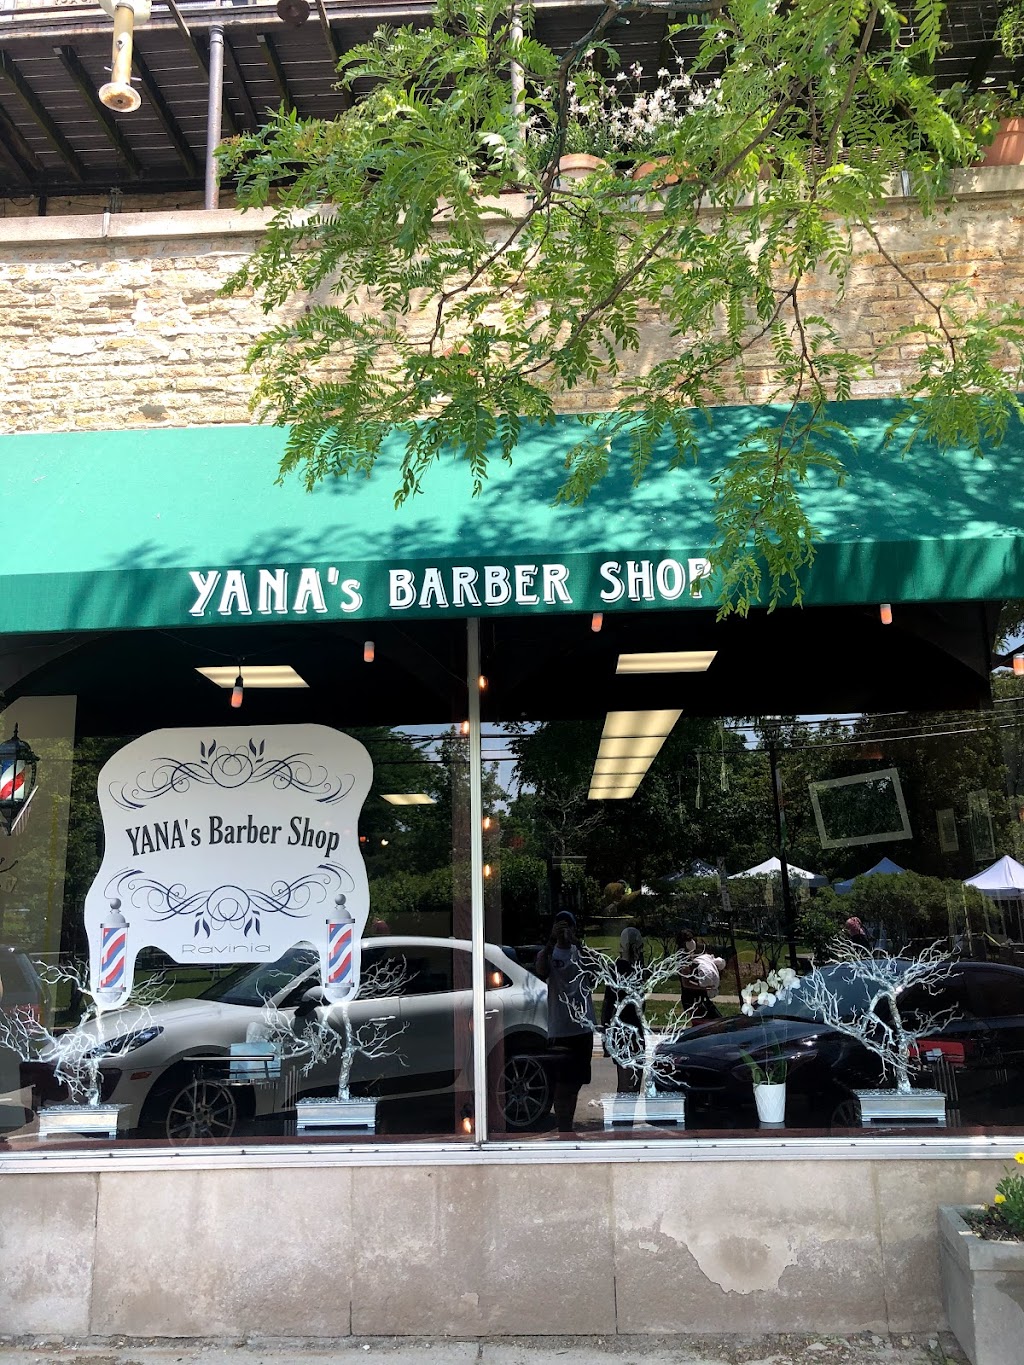 Yanas Barber Shop of Ravinia | 463 Roger Williams Ave, Highland Park, IL 60035, USA | Phone: (847) 322-9863